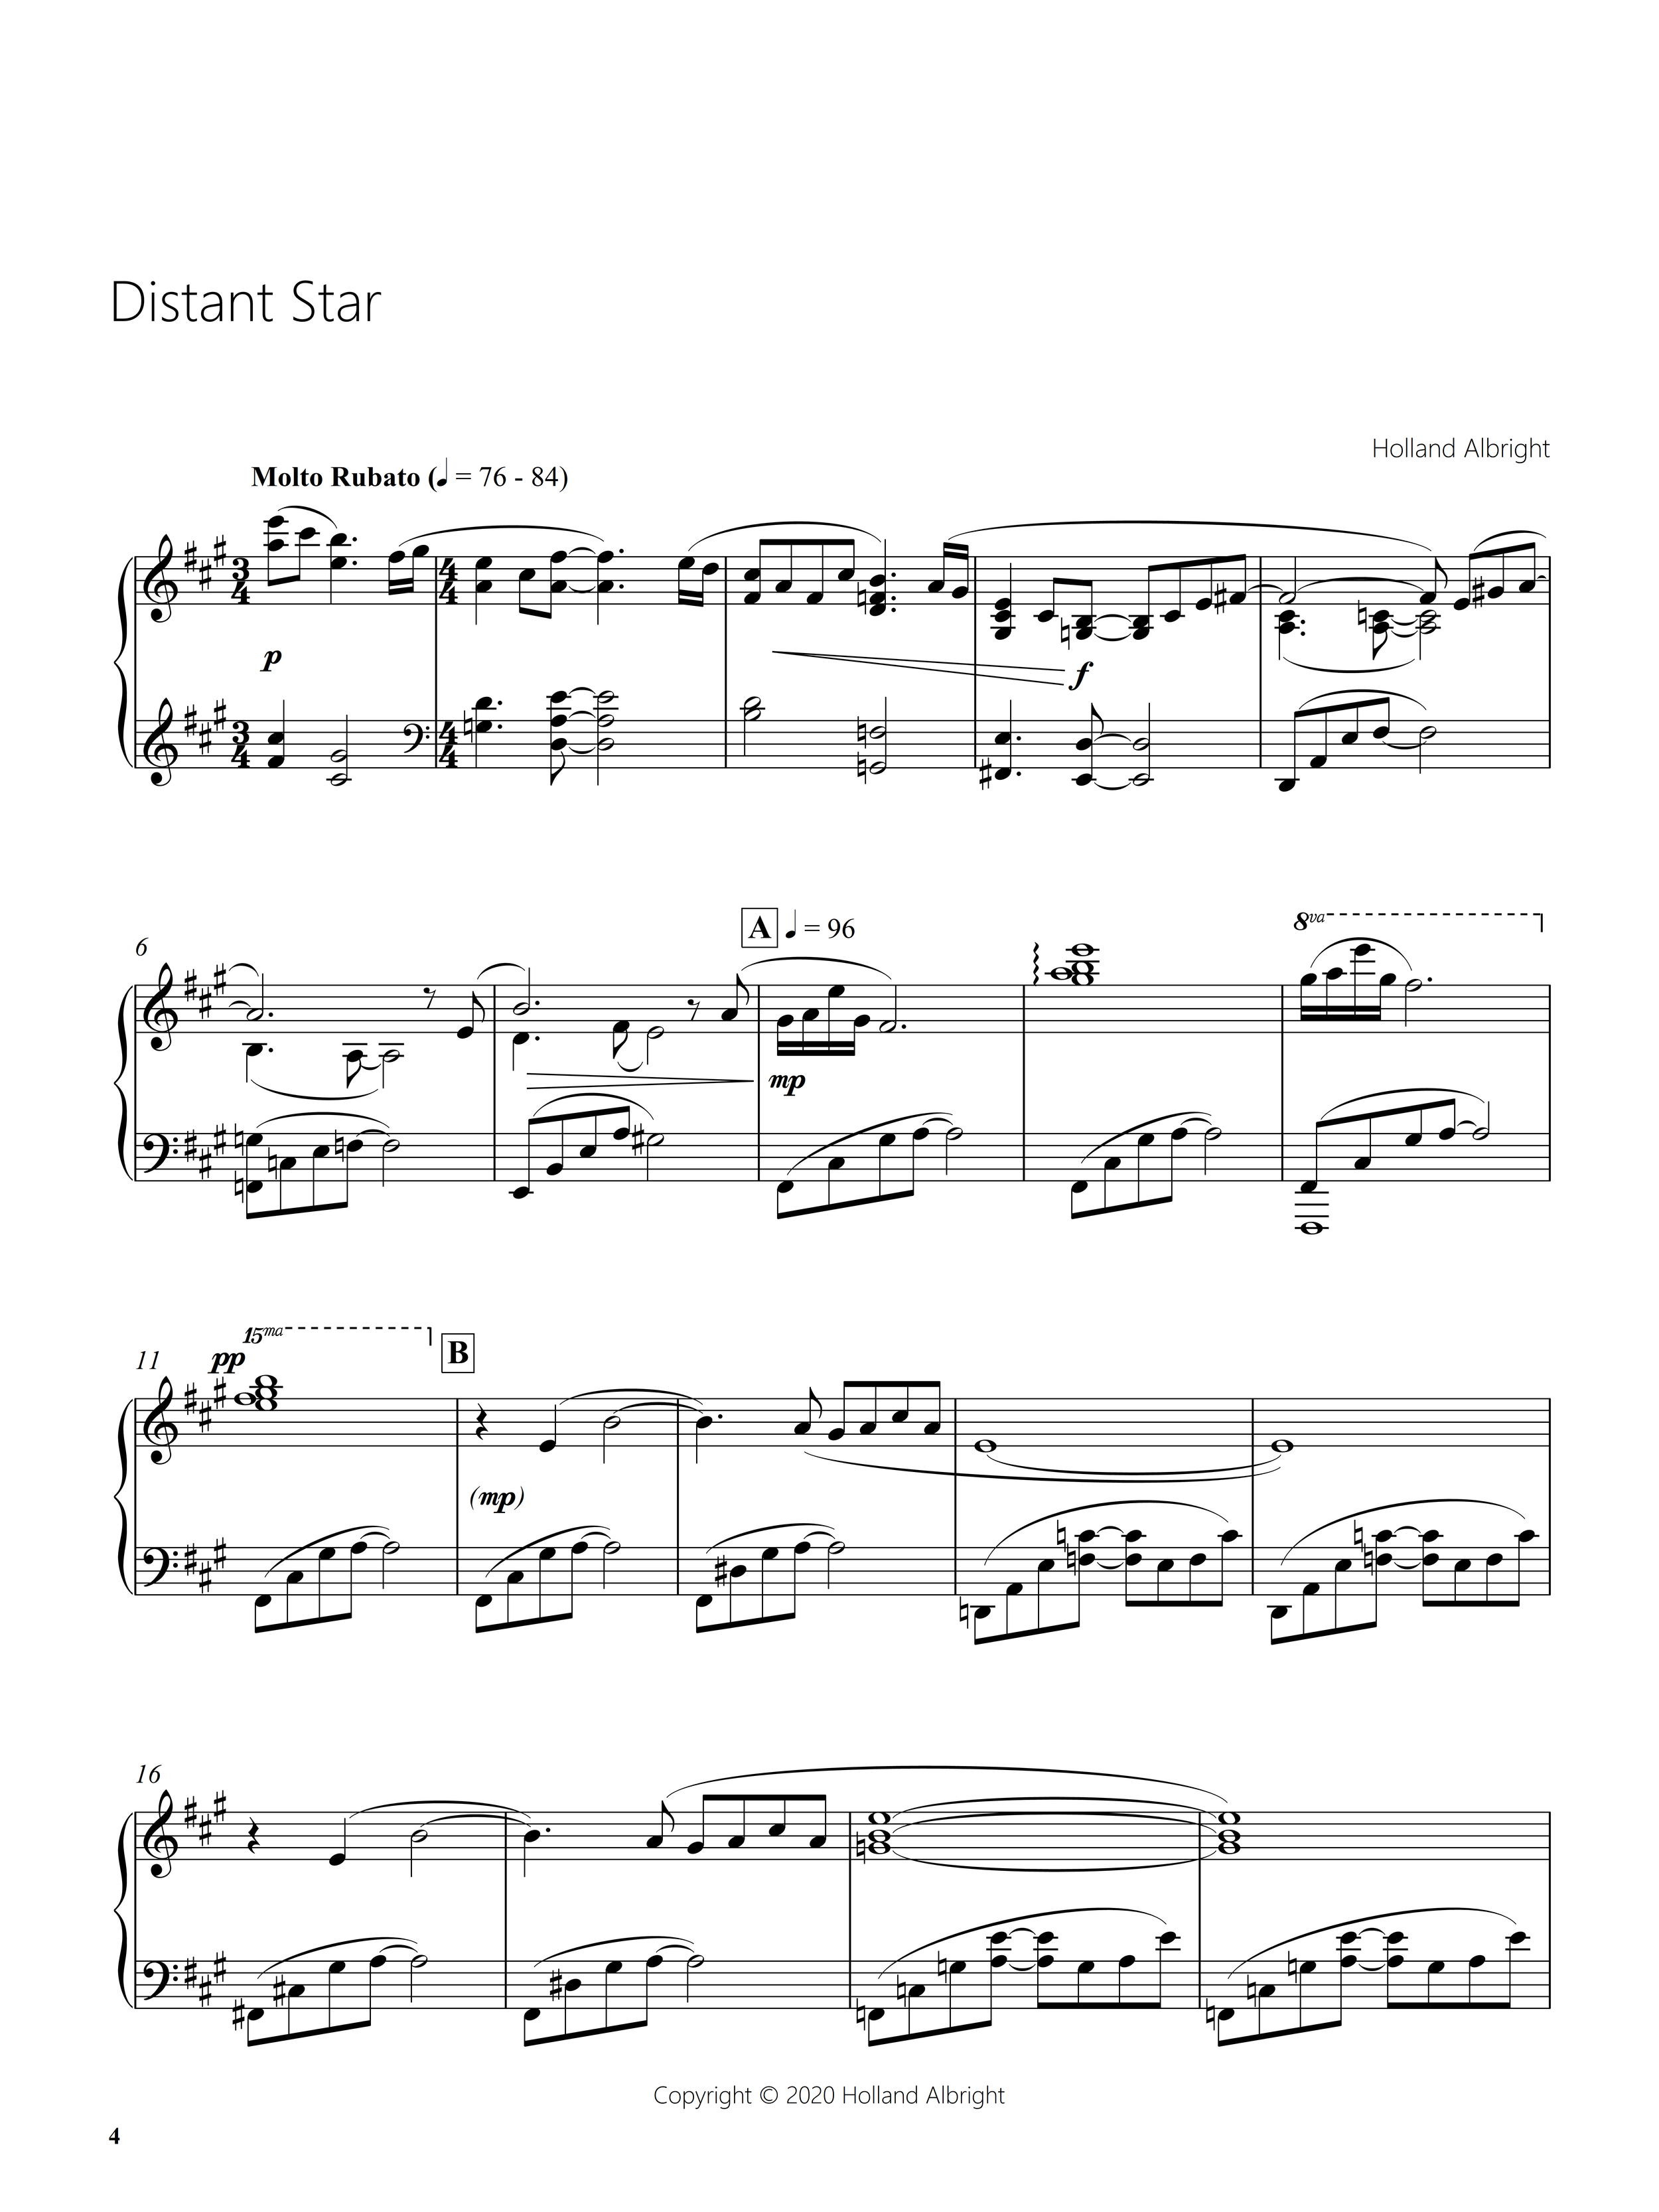 DISTANT STAR - June 25 2020 Piano Solo - Piano_0004.png